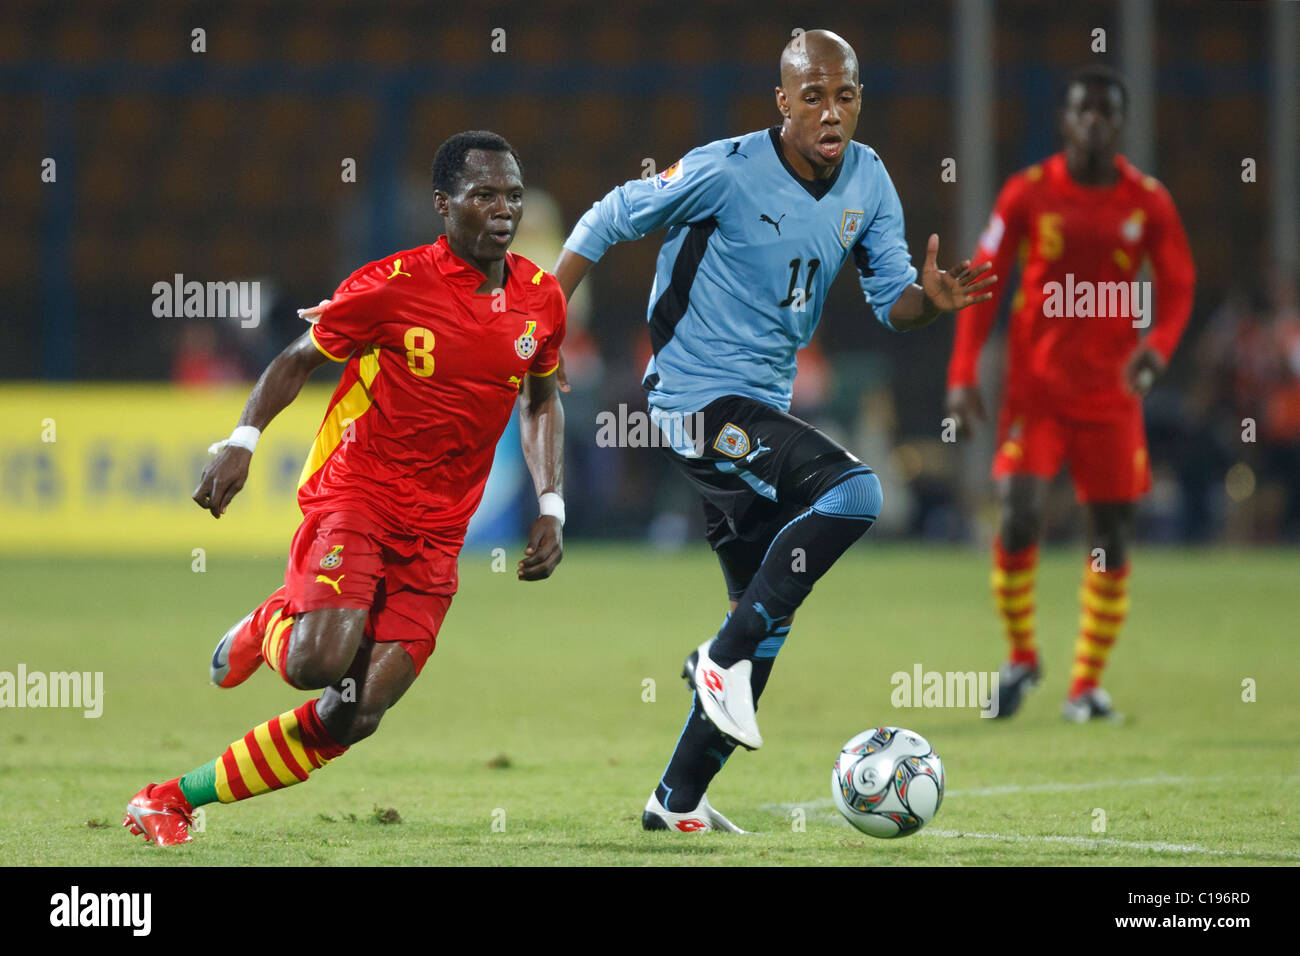 Emmanuel Agyemang Badu of Ghana (8) drives the ball against Abel Hernandez of Uruguay (11) during a FIFA U-20 World Cup match. Stock Photo